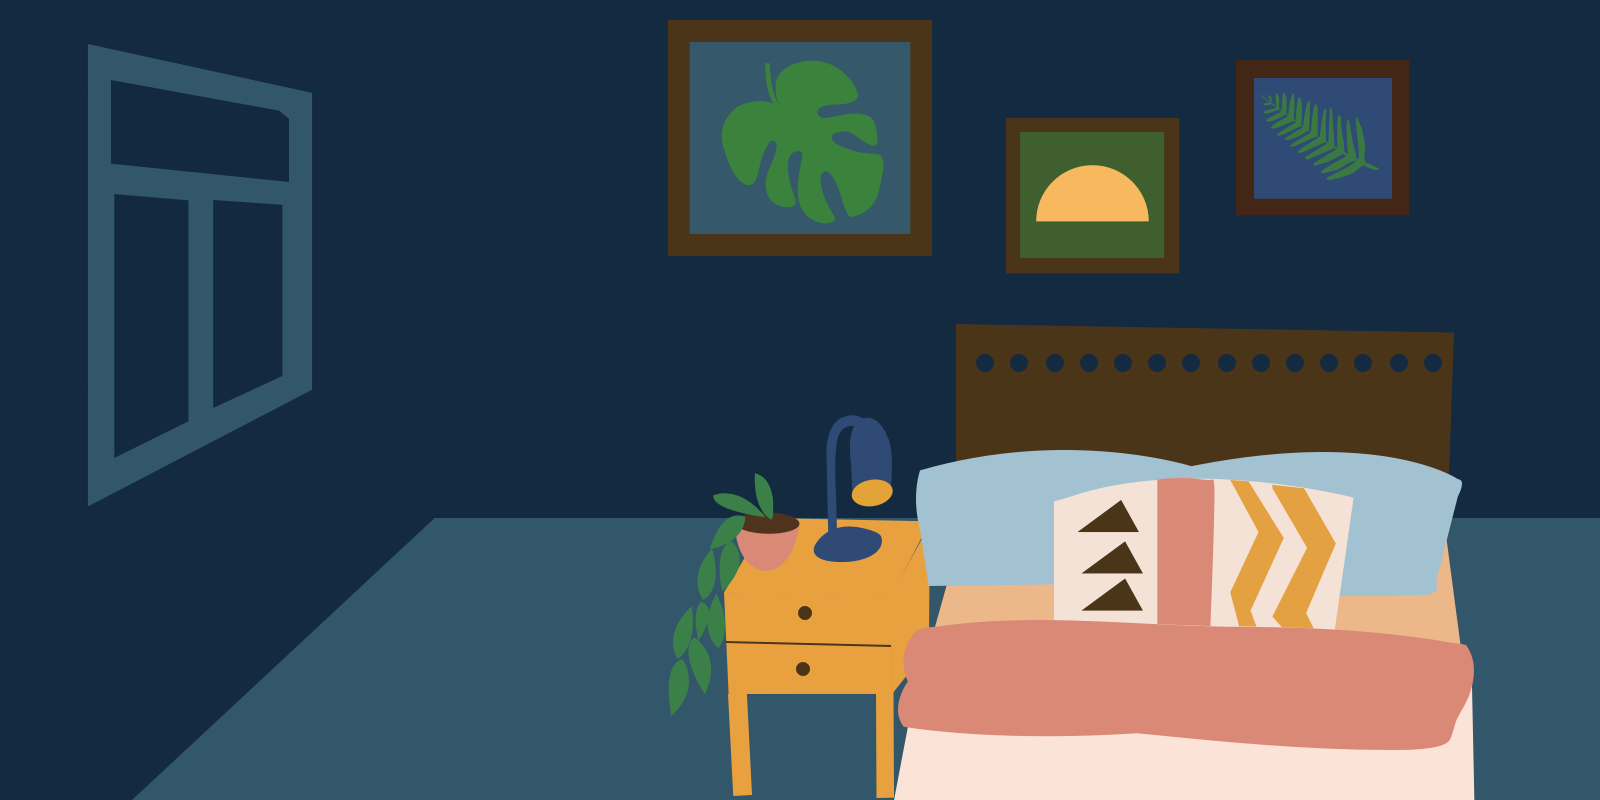 How to get better sleep: A very dark room can help improve your sleep.